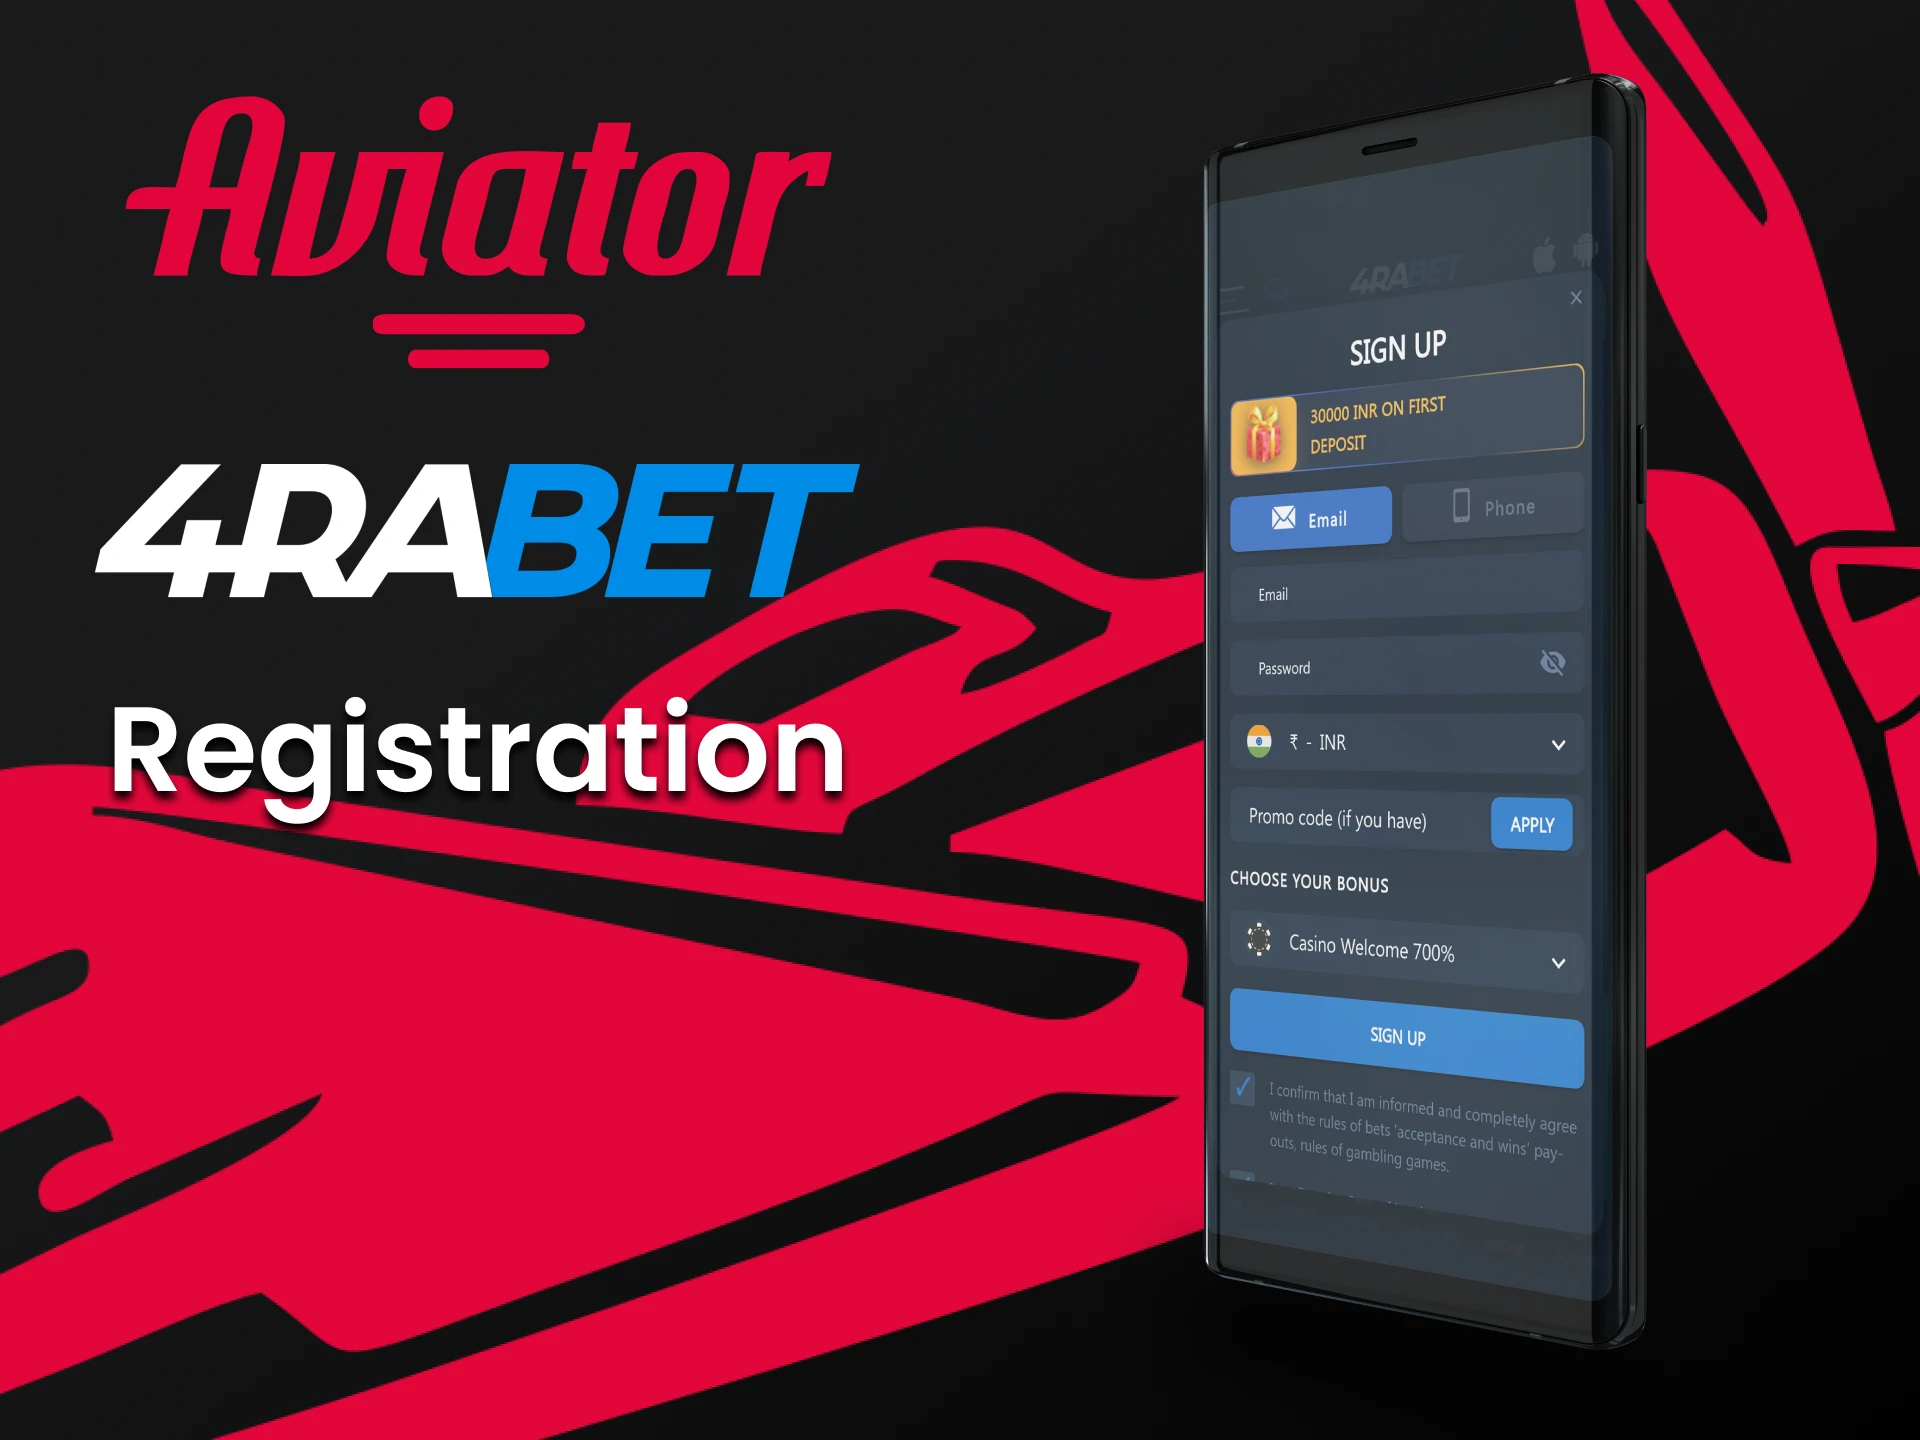 Create a 4rabet account to play Aviator.